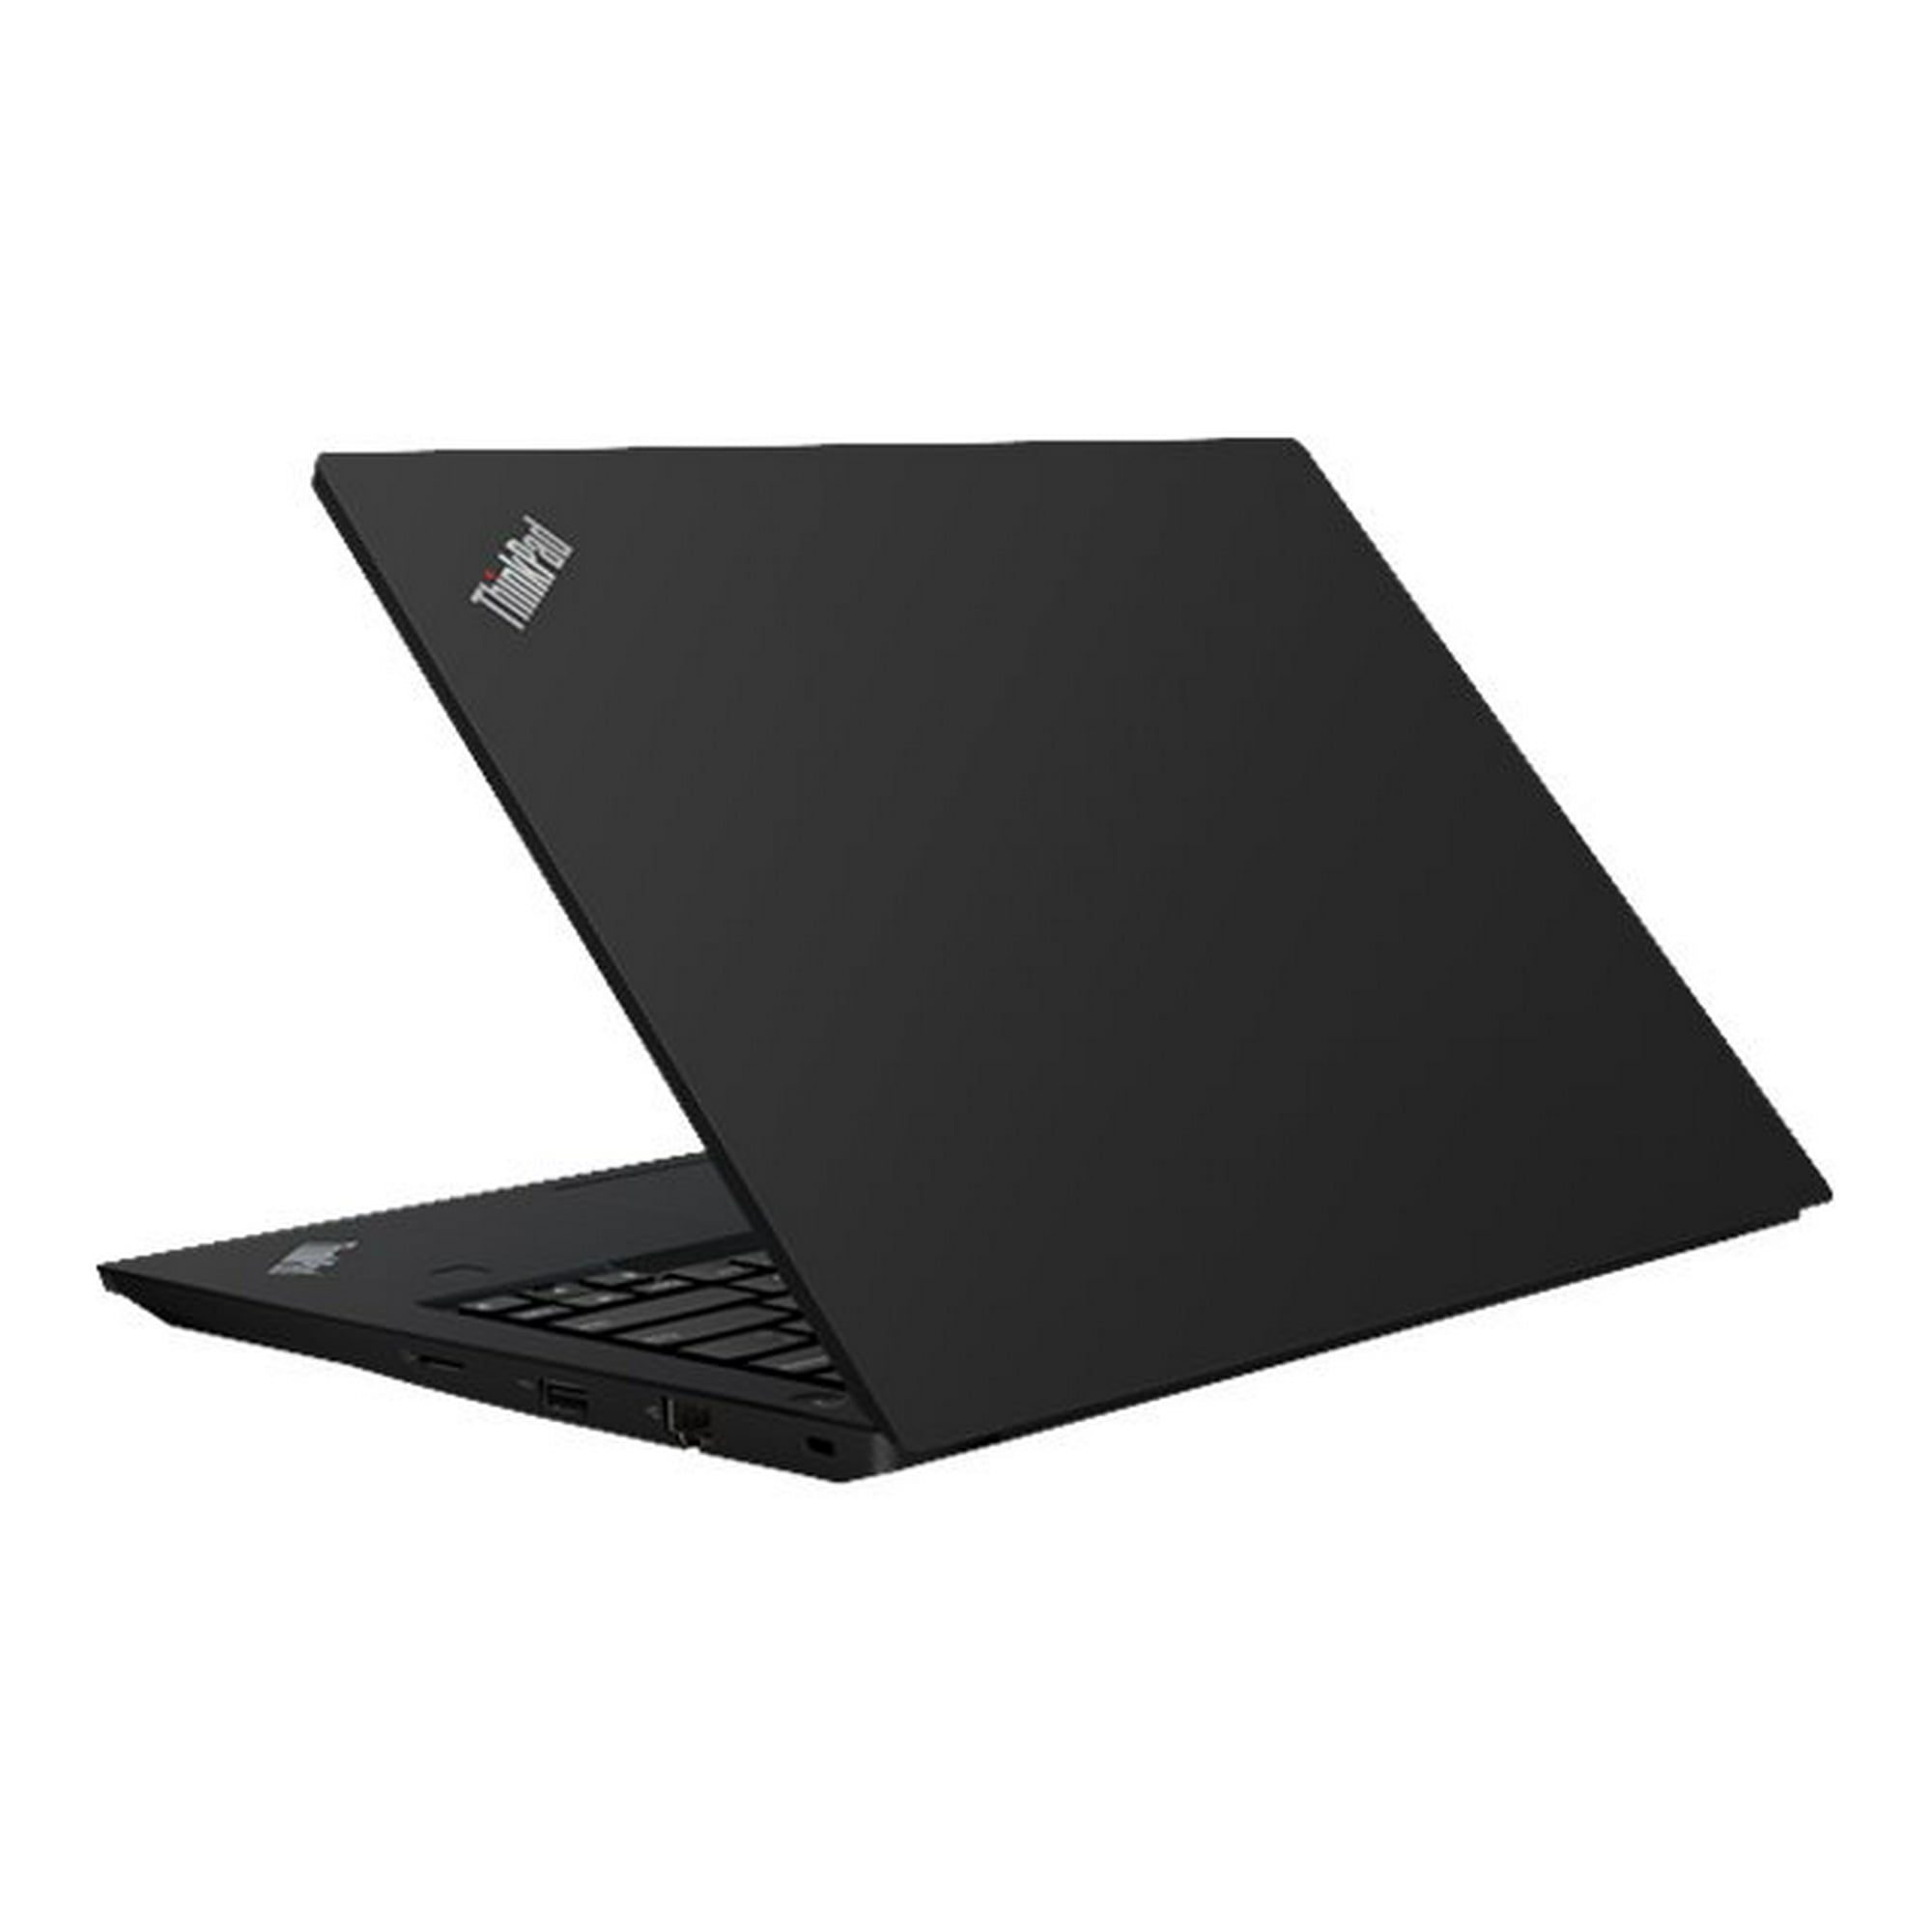 Lenovo ThinkPad E495 20NE - AMD Ryzen 7 3700U / 2.3 GHz - Win 10 